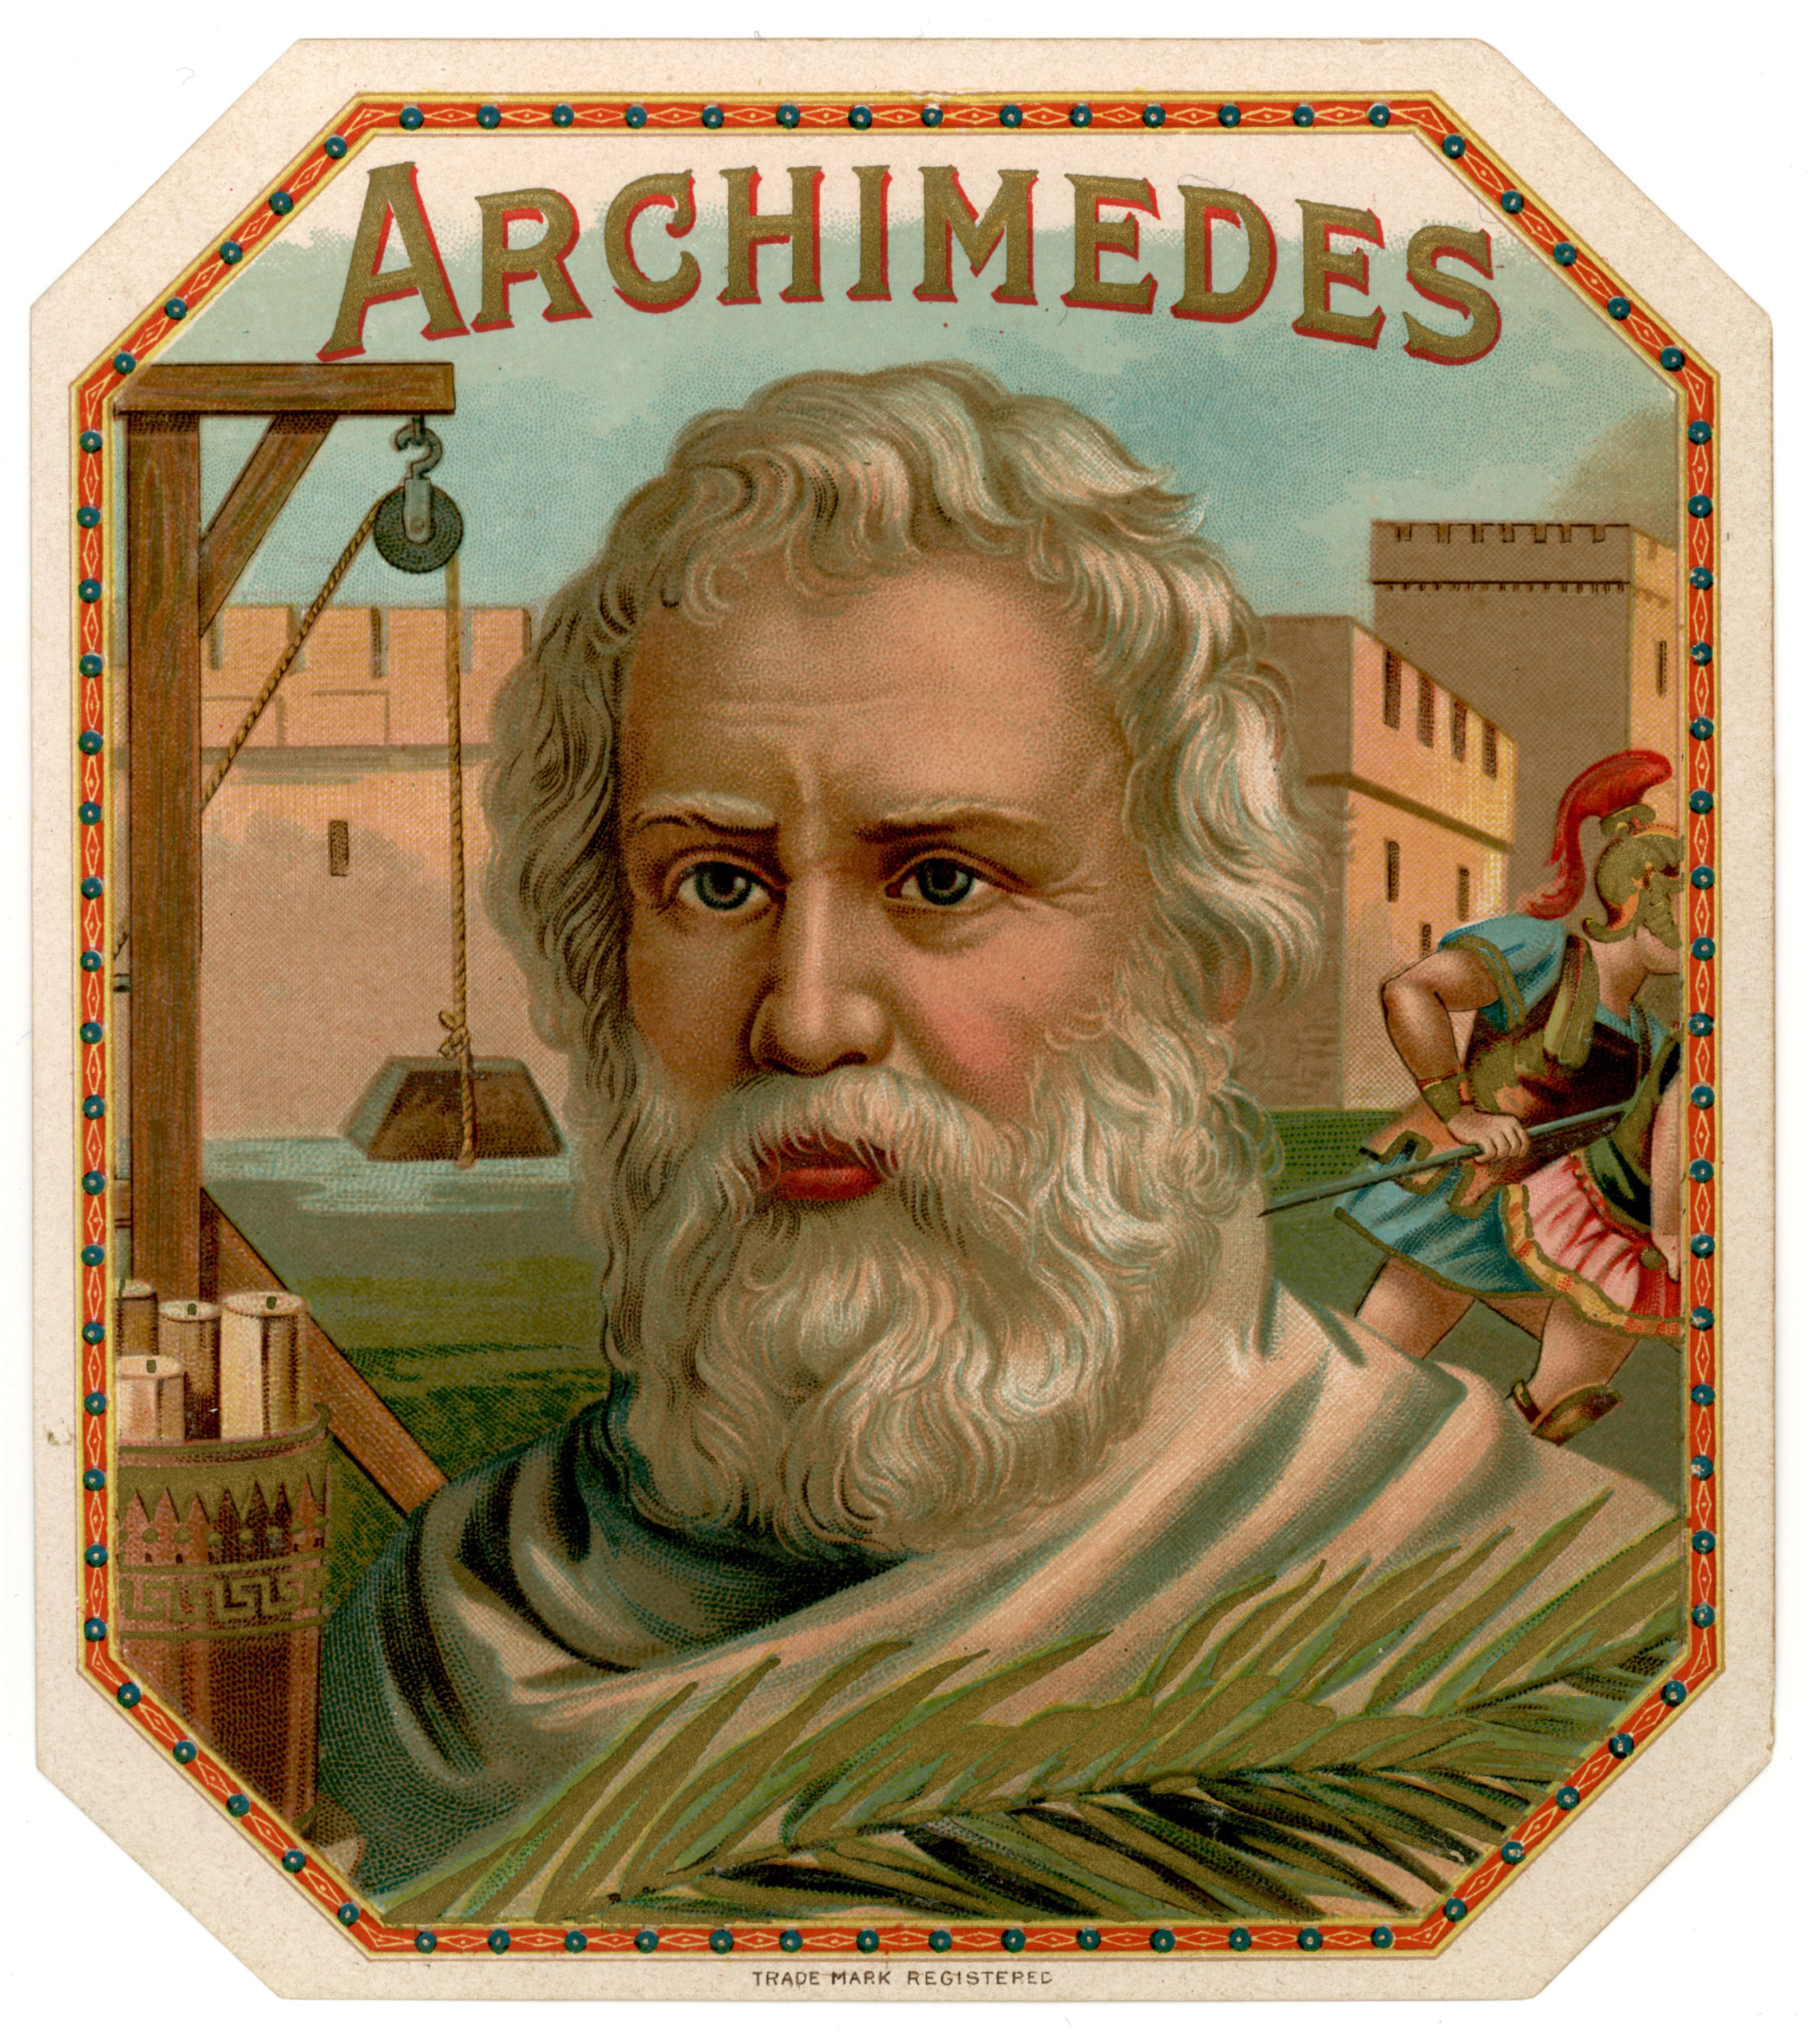  Archimedes Untuk Dunia, Archimedes Untuk Roseville